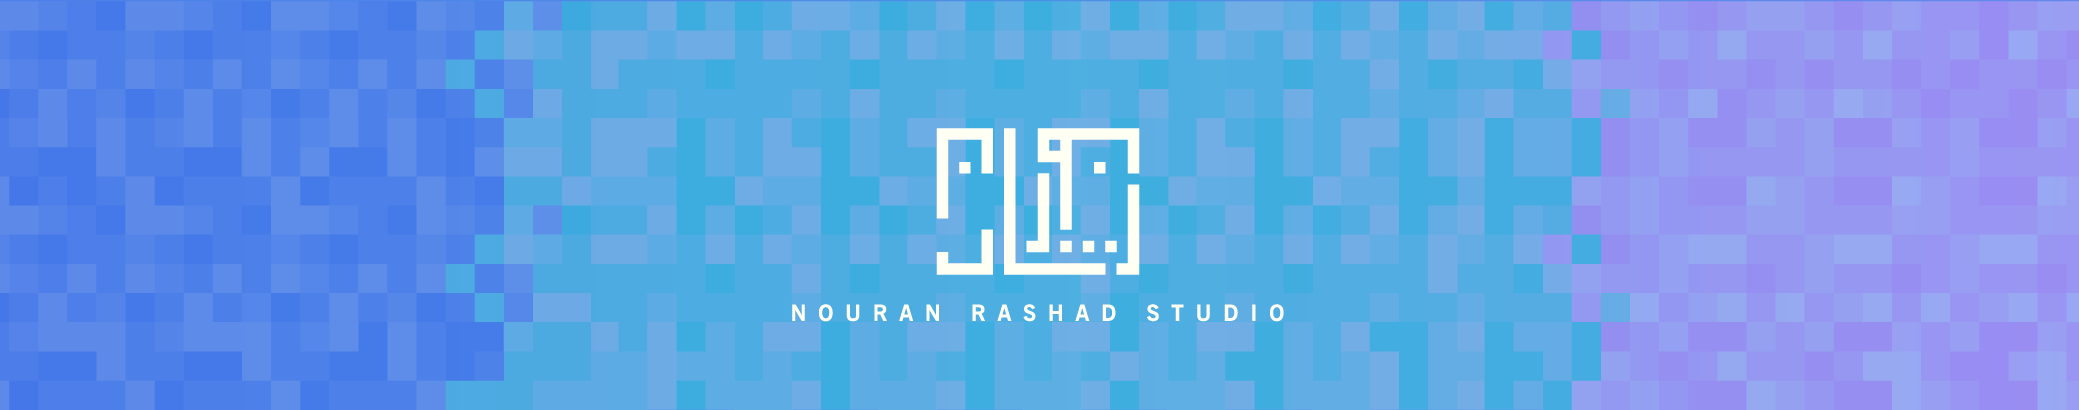 Banner profilu uživatele Nouran Rashad